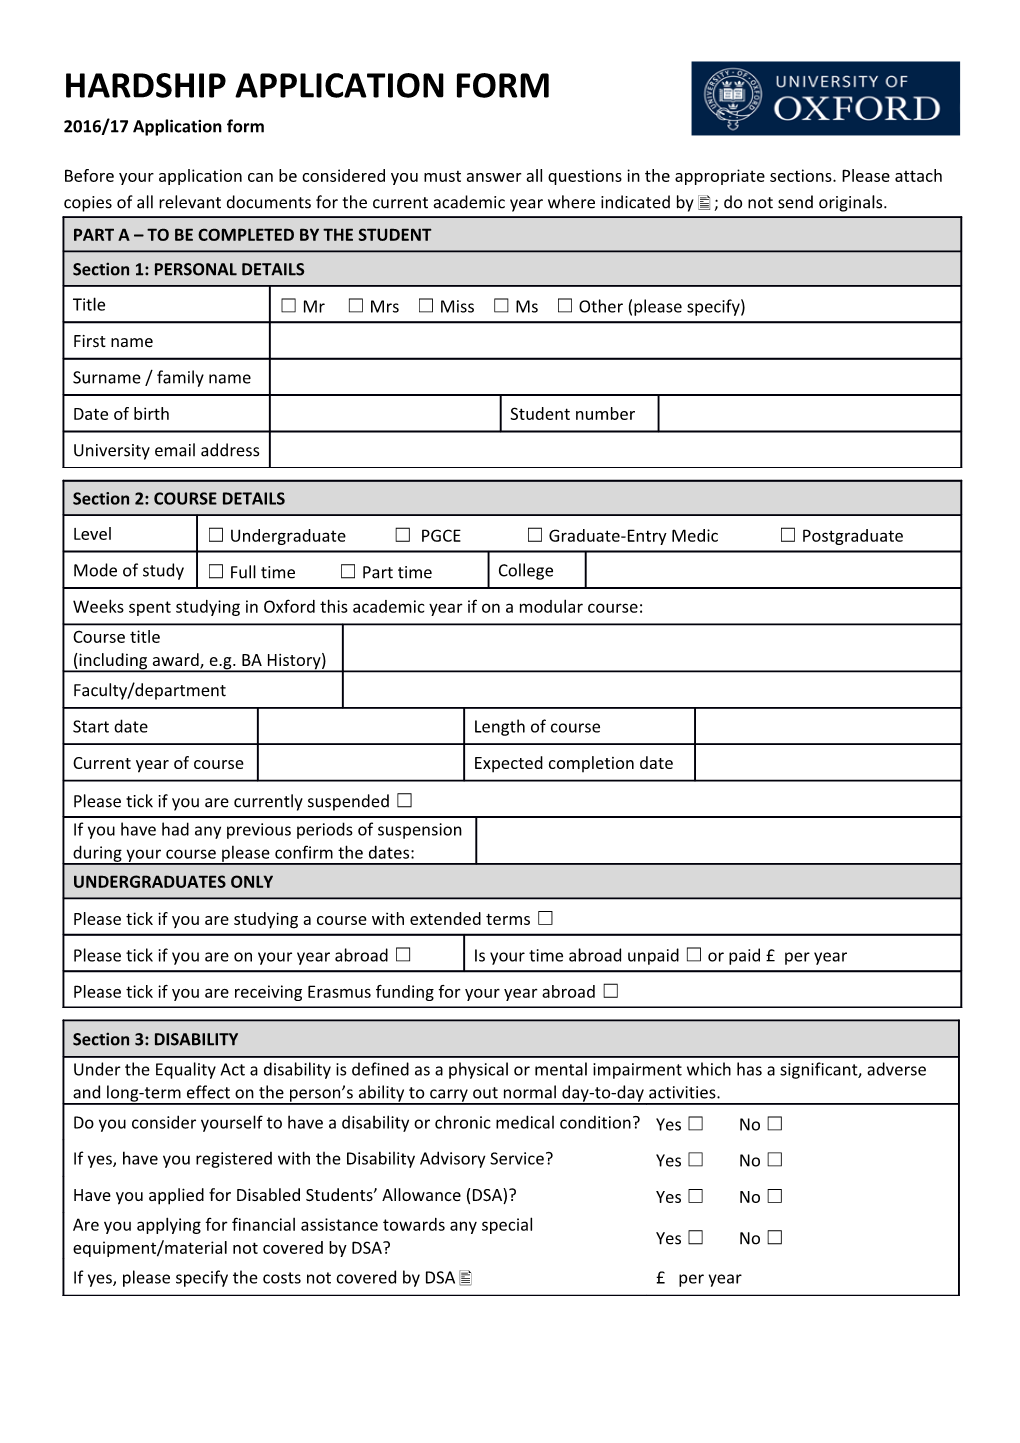 2016/17 Application Form